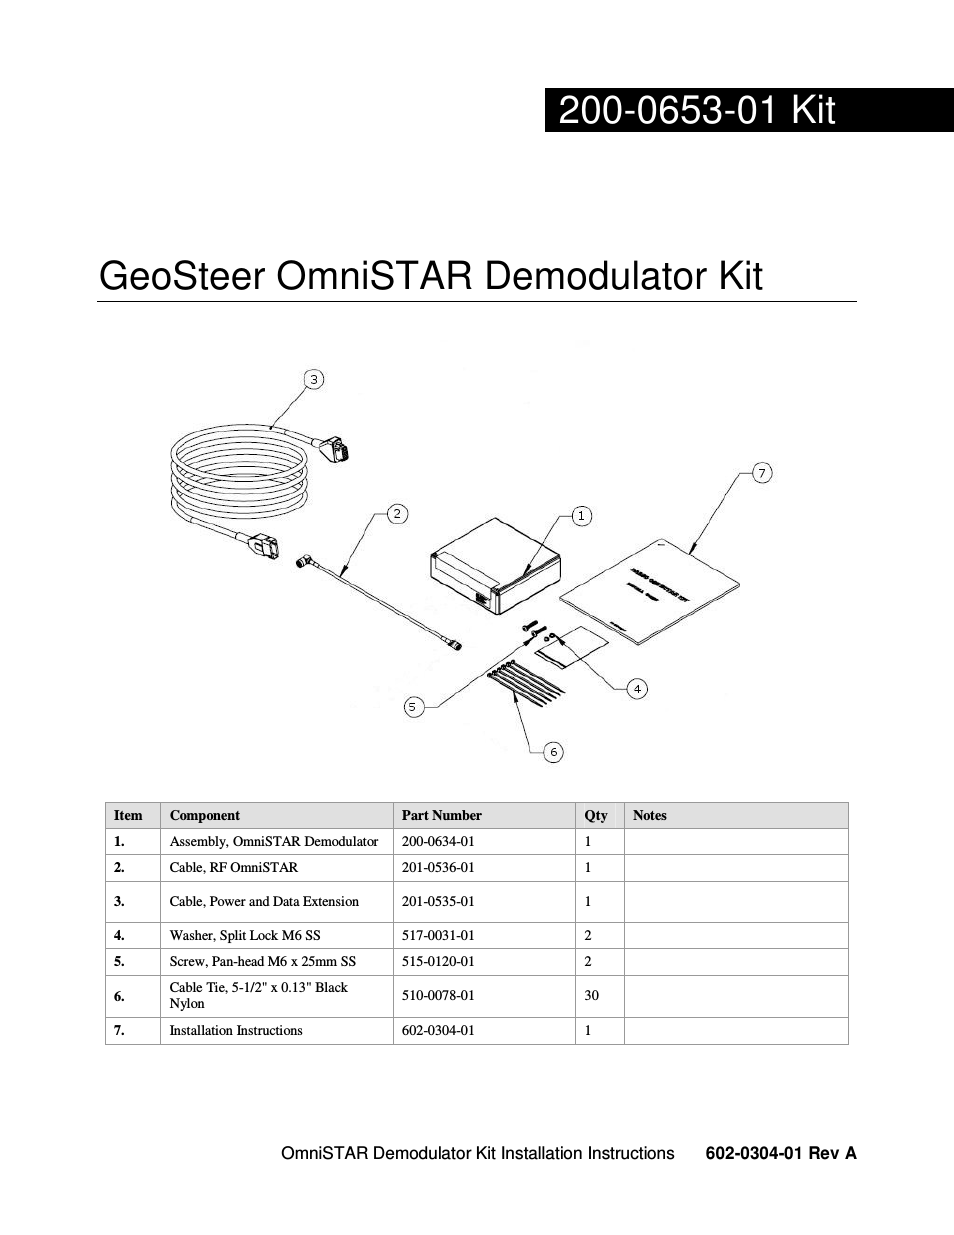 GeoSteer OmniSTAR Demodulator Installation Manual